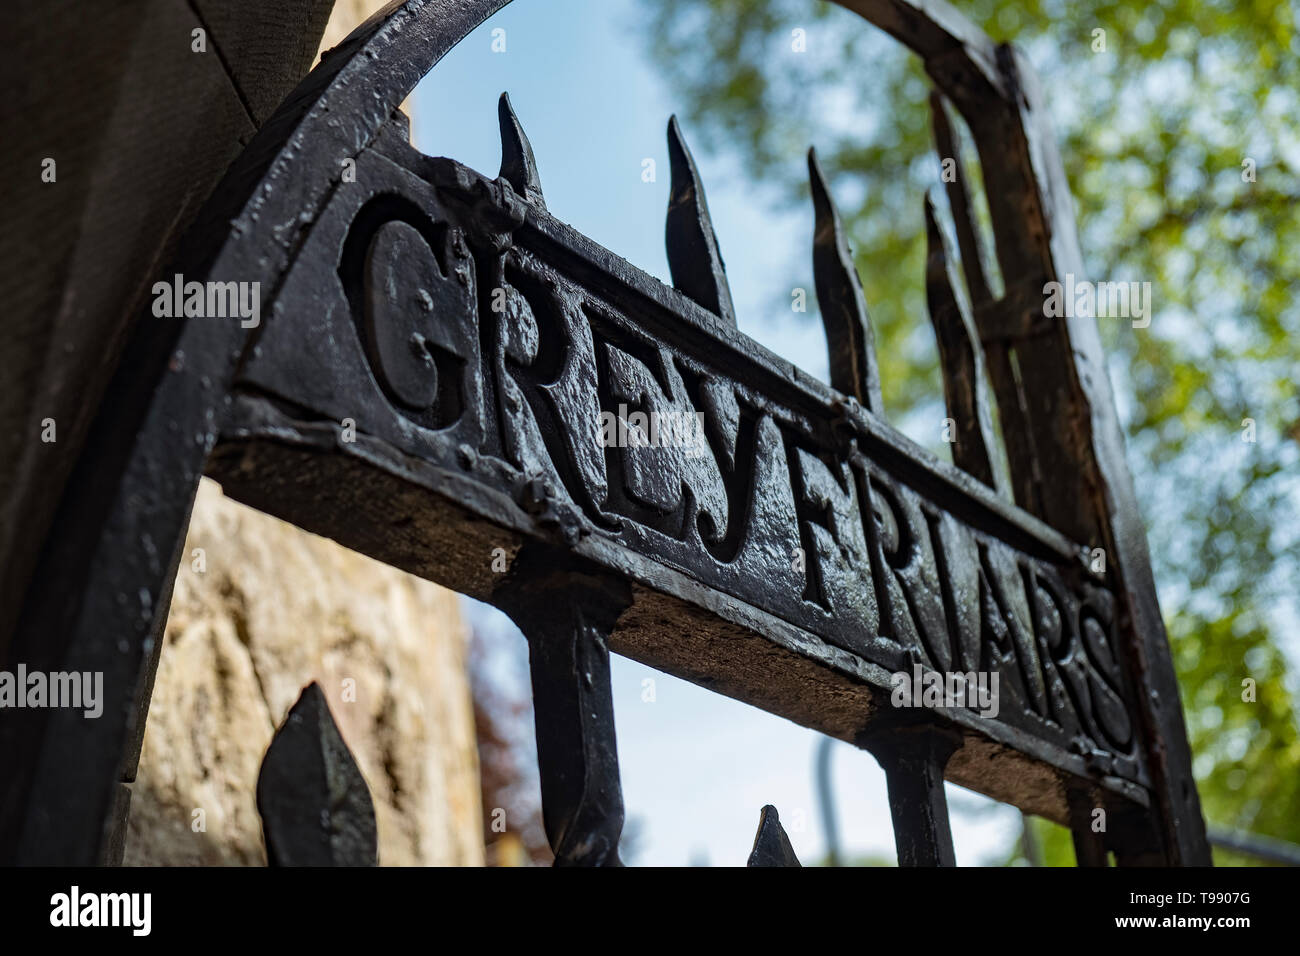 Ornate gates at entrance to Greyfriars Churchyard in Edinburgh Old Town, Scotland, UK Stock Photo